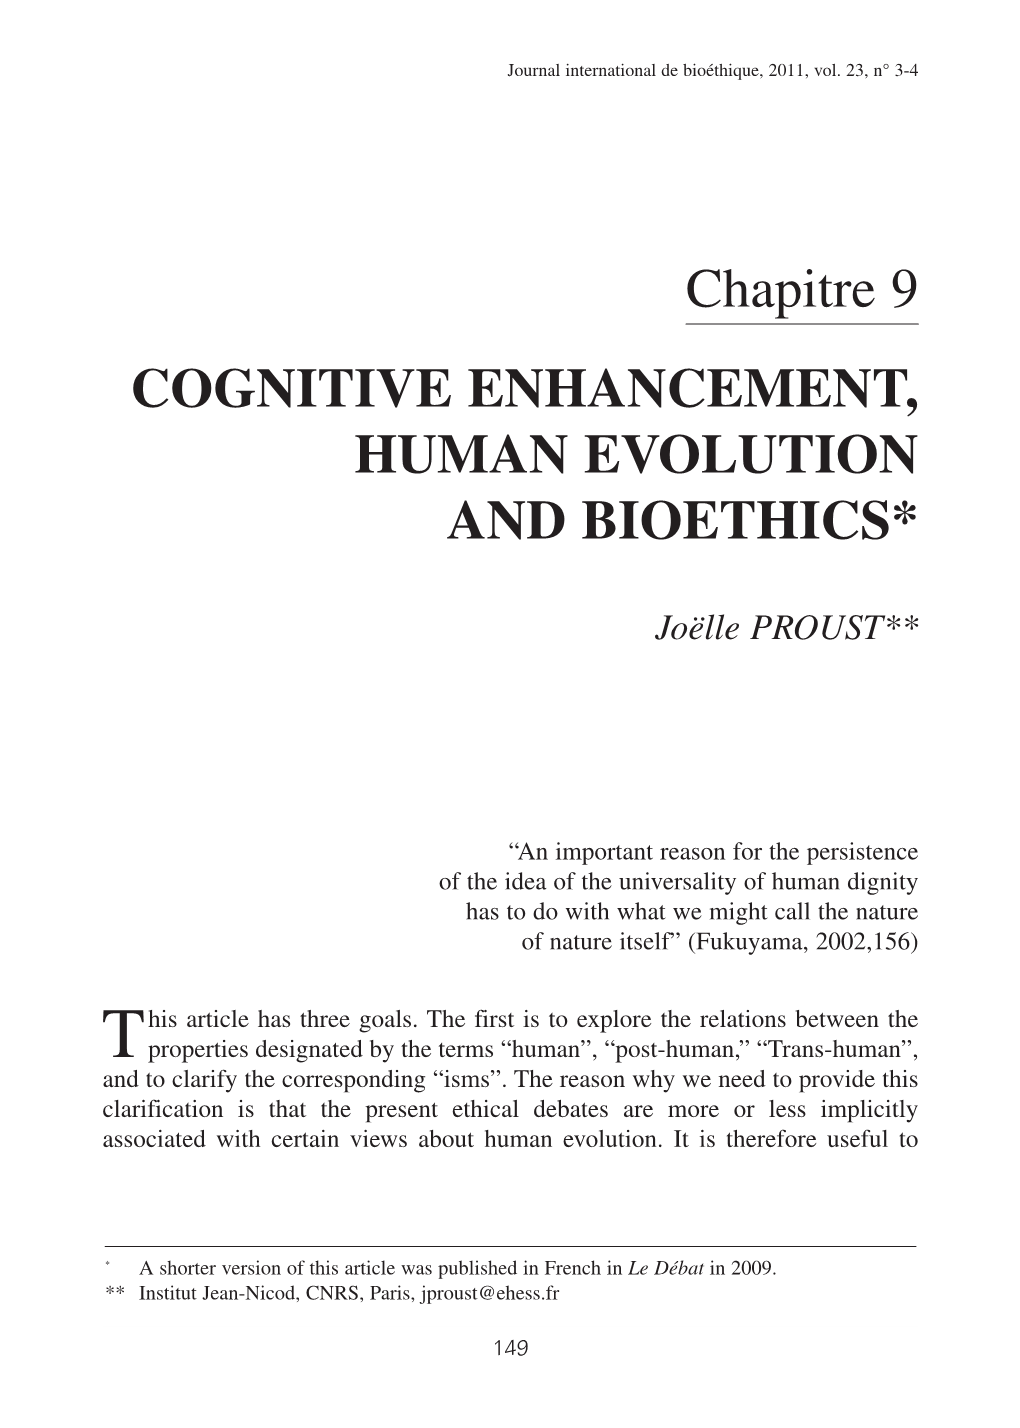 Cognitive Enhancement, Human Evolution and Bioethics*